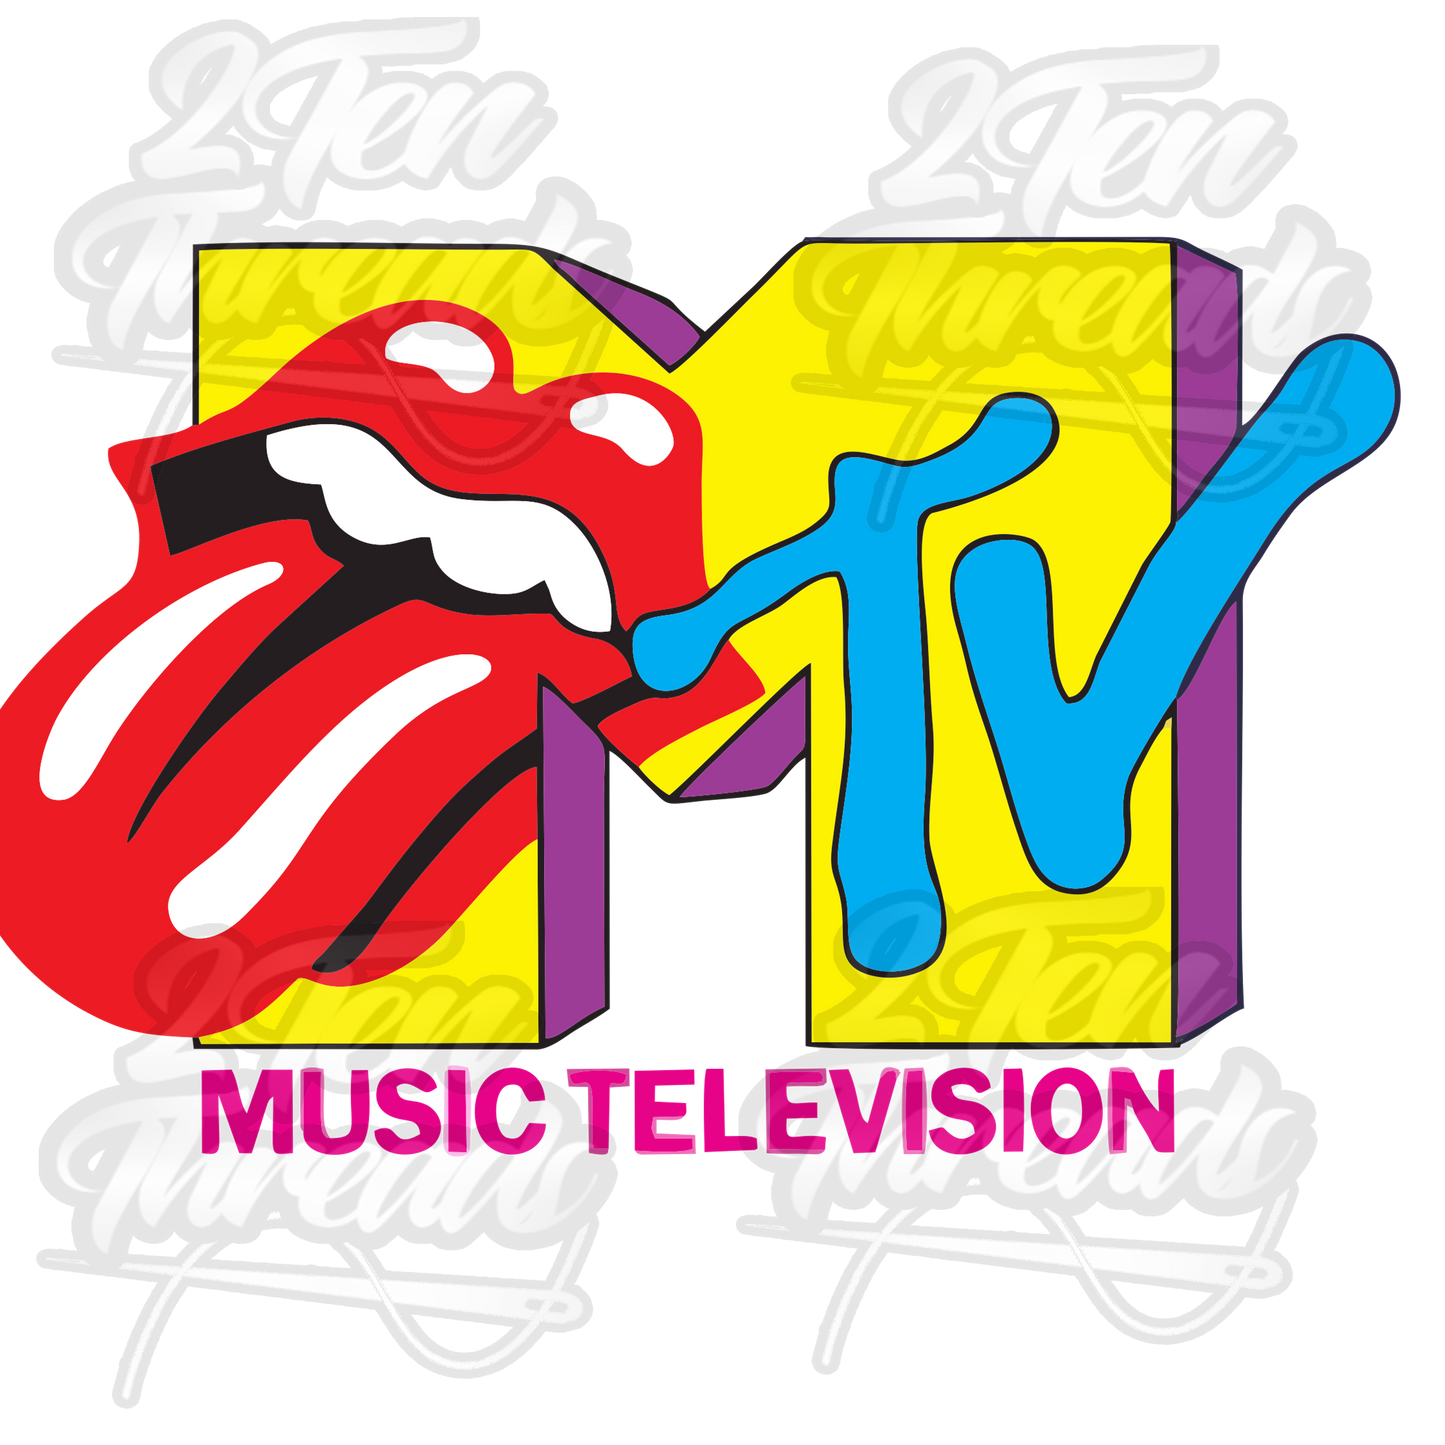 MTV Vintage Shirt